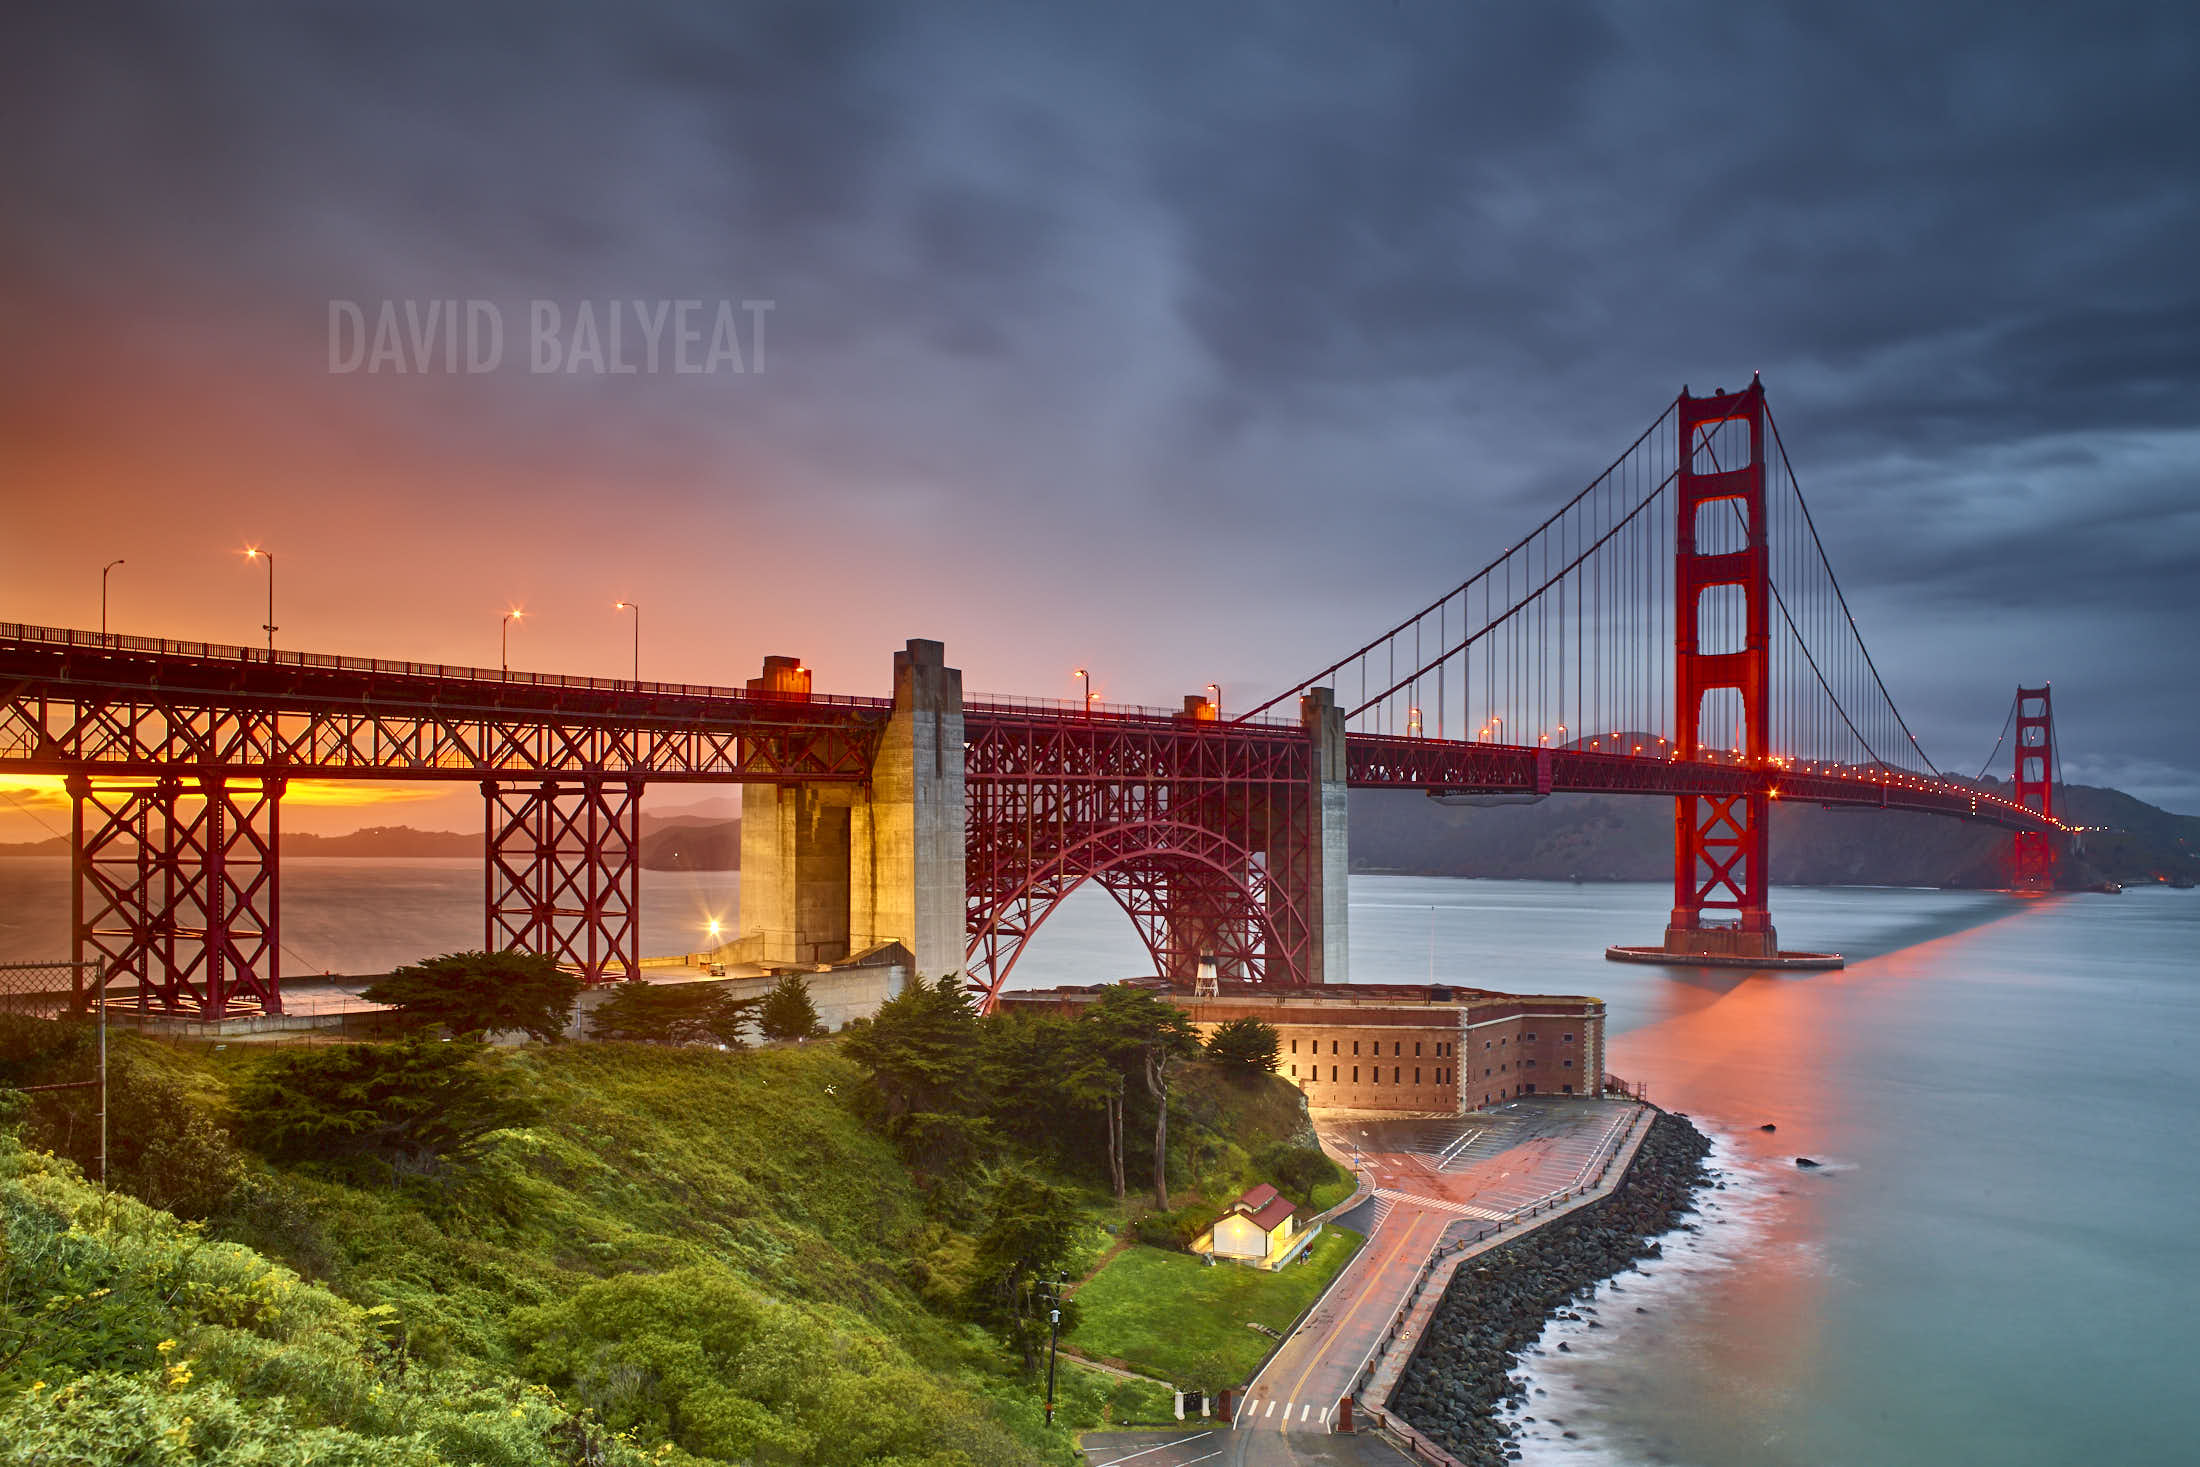 Golden Gate Bridge and San Francisco Bay at Sunset